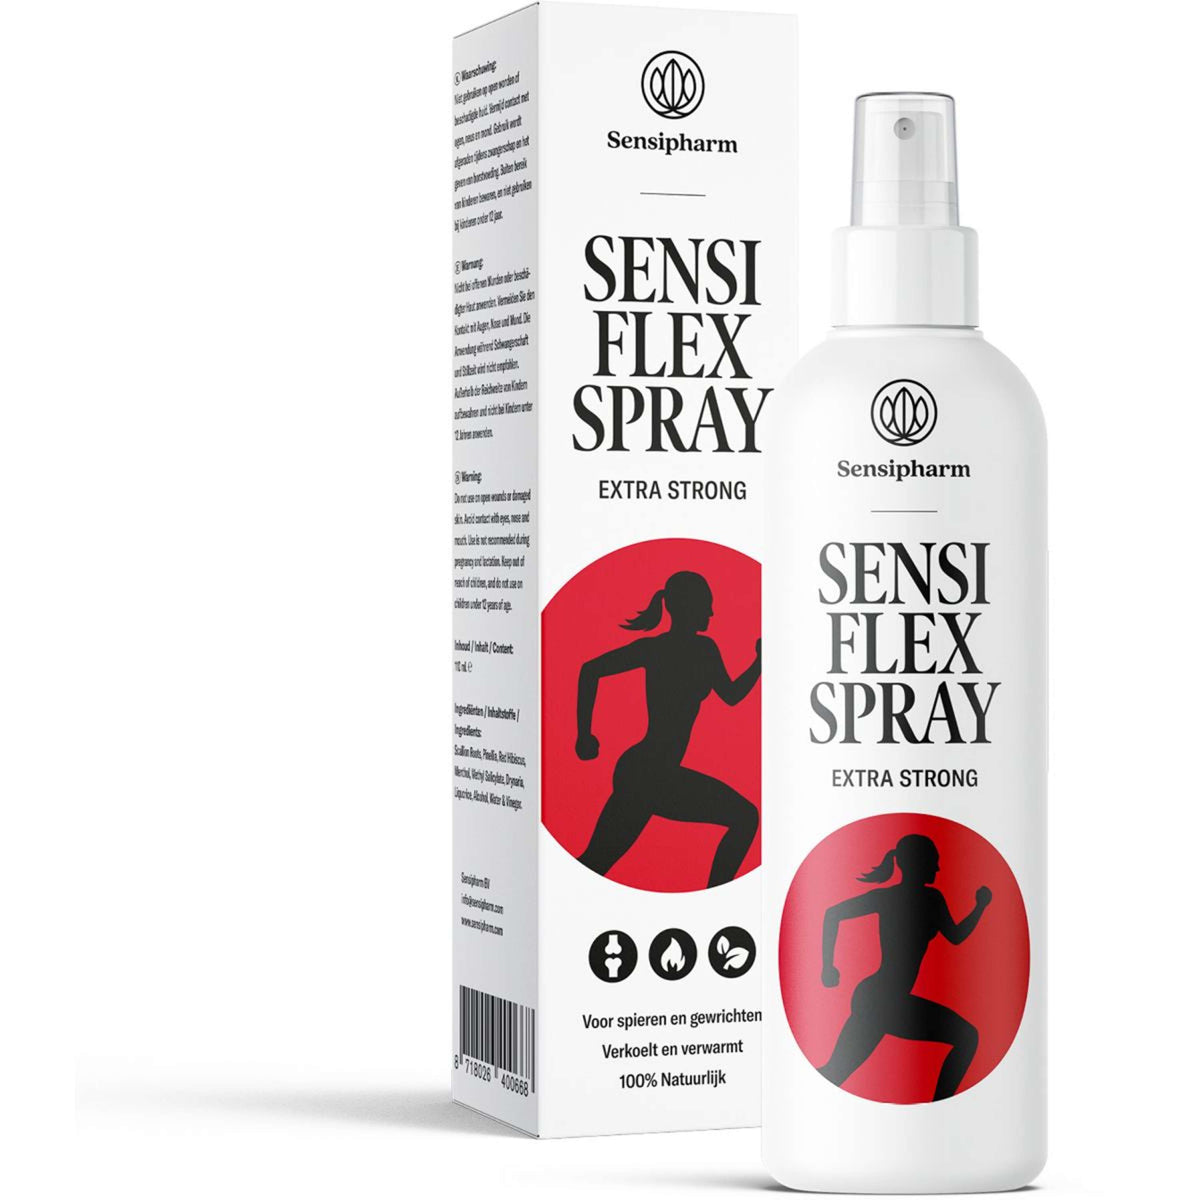 Sensipharm Spray Sensi Flex Extra Strong